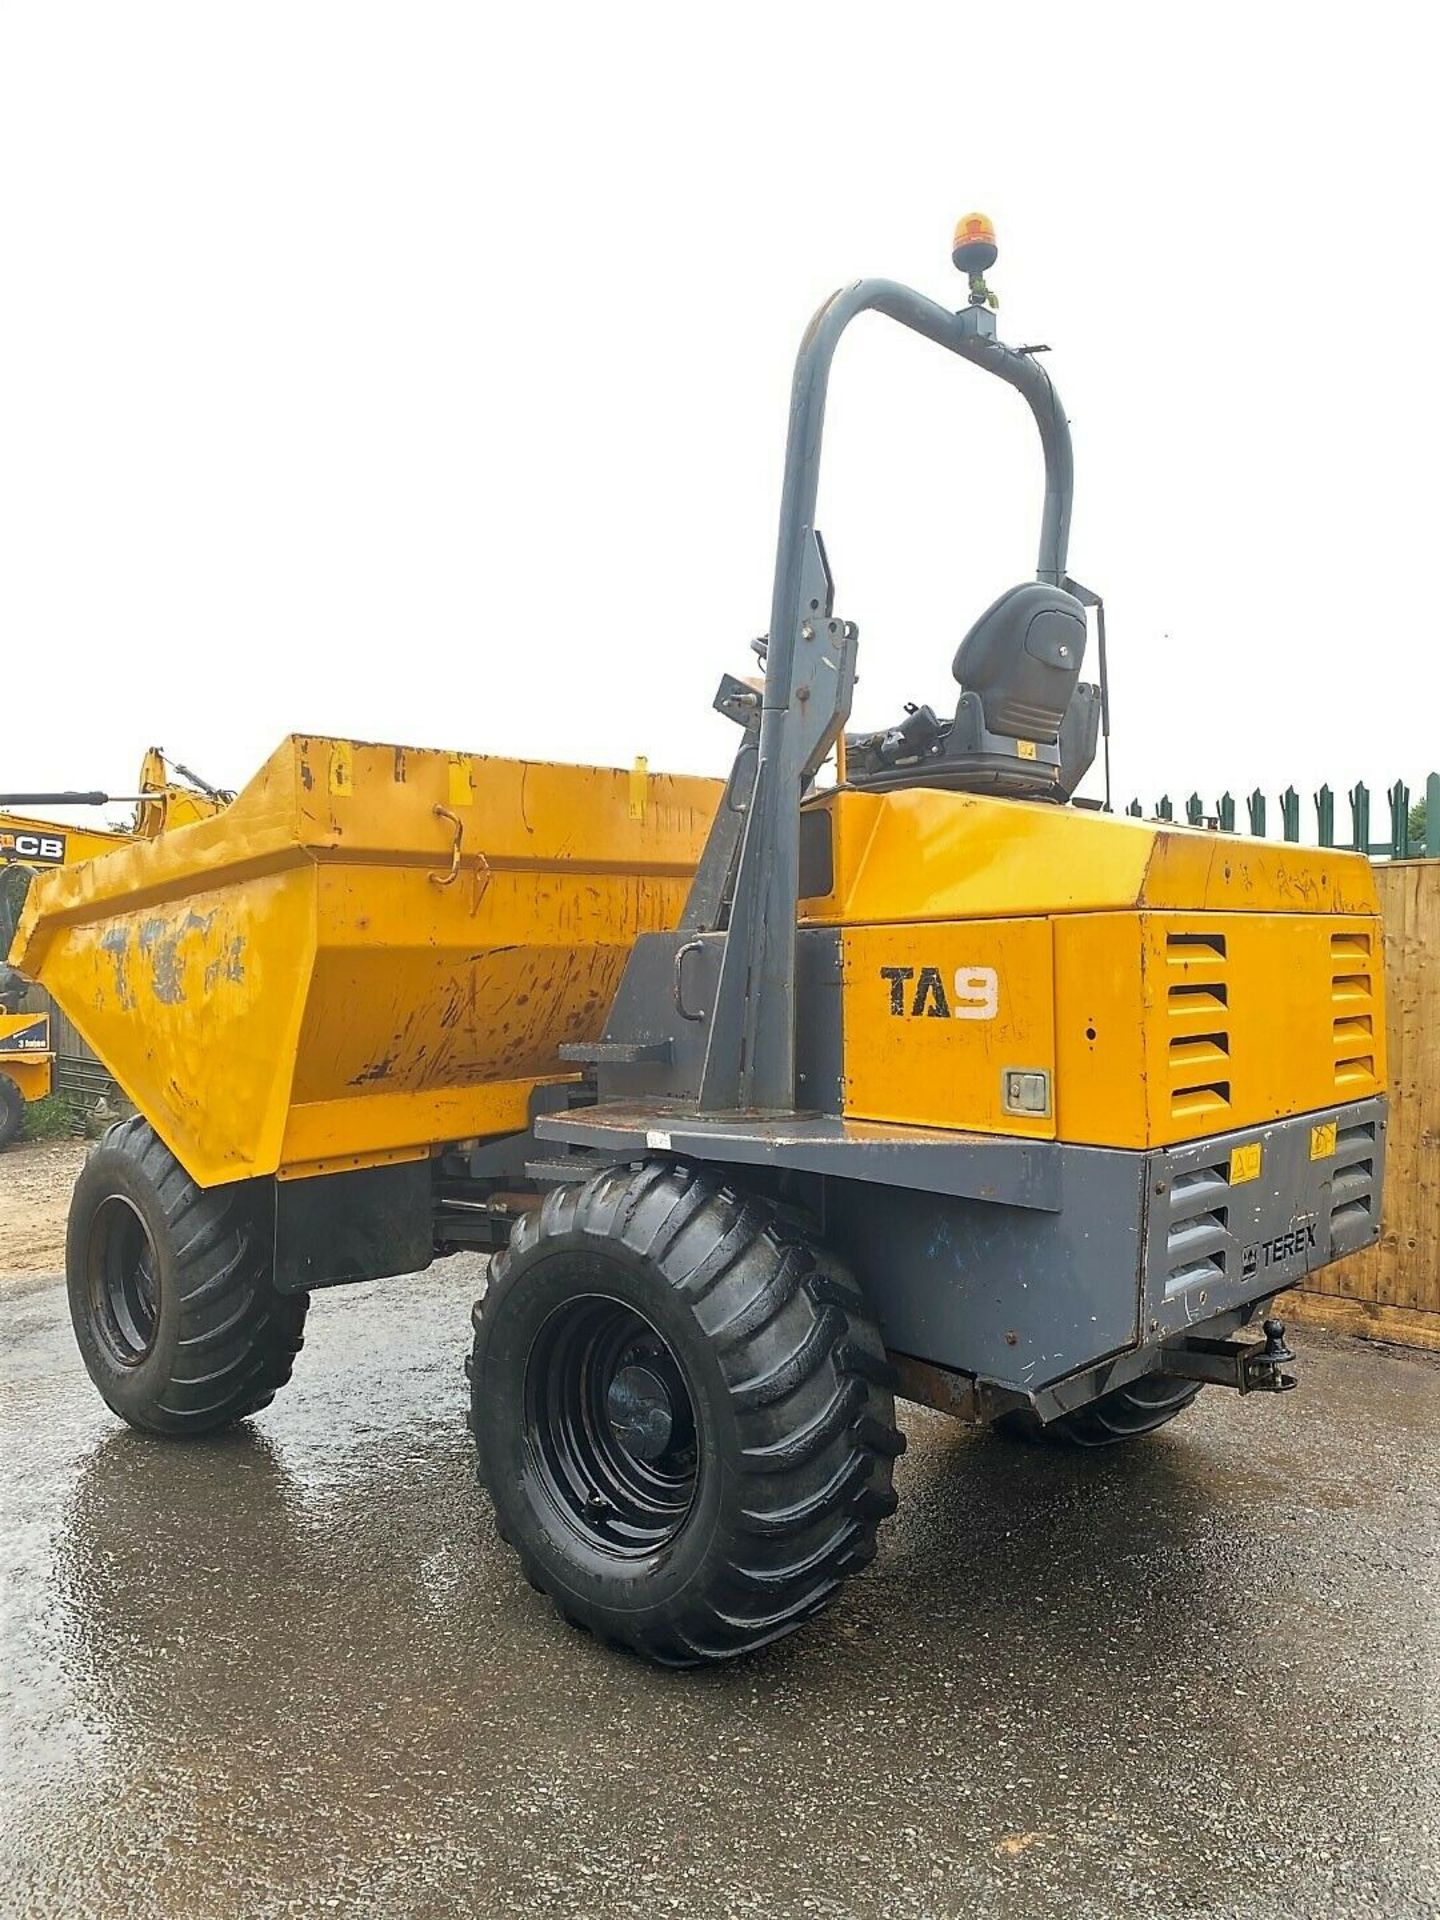 Terex TA9 9 Tonne Dumper 2012 - Image 5 of 12